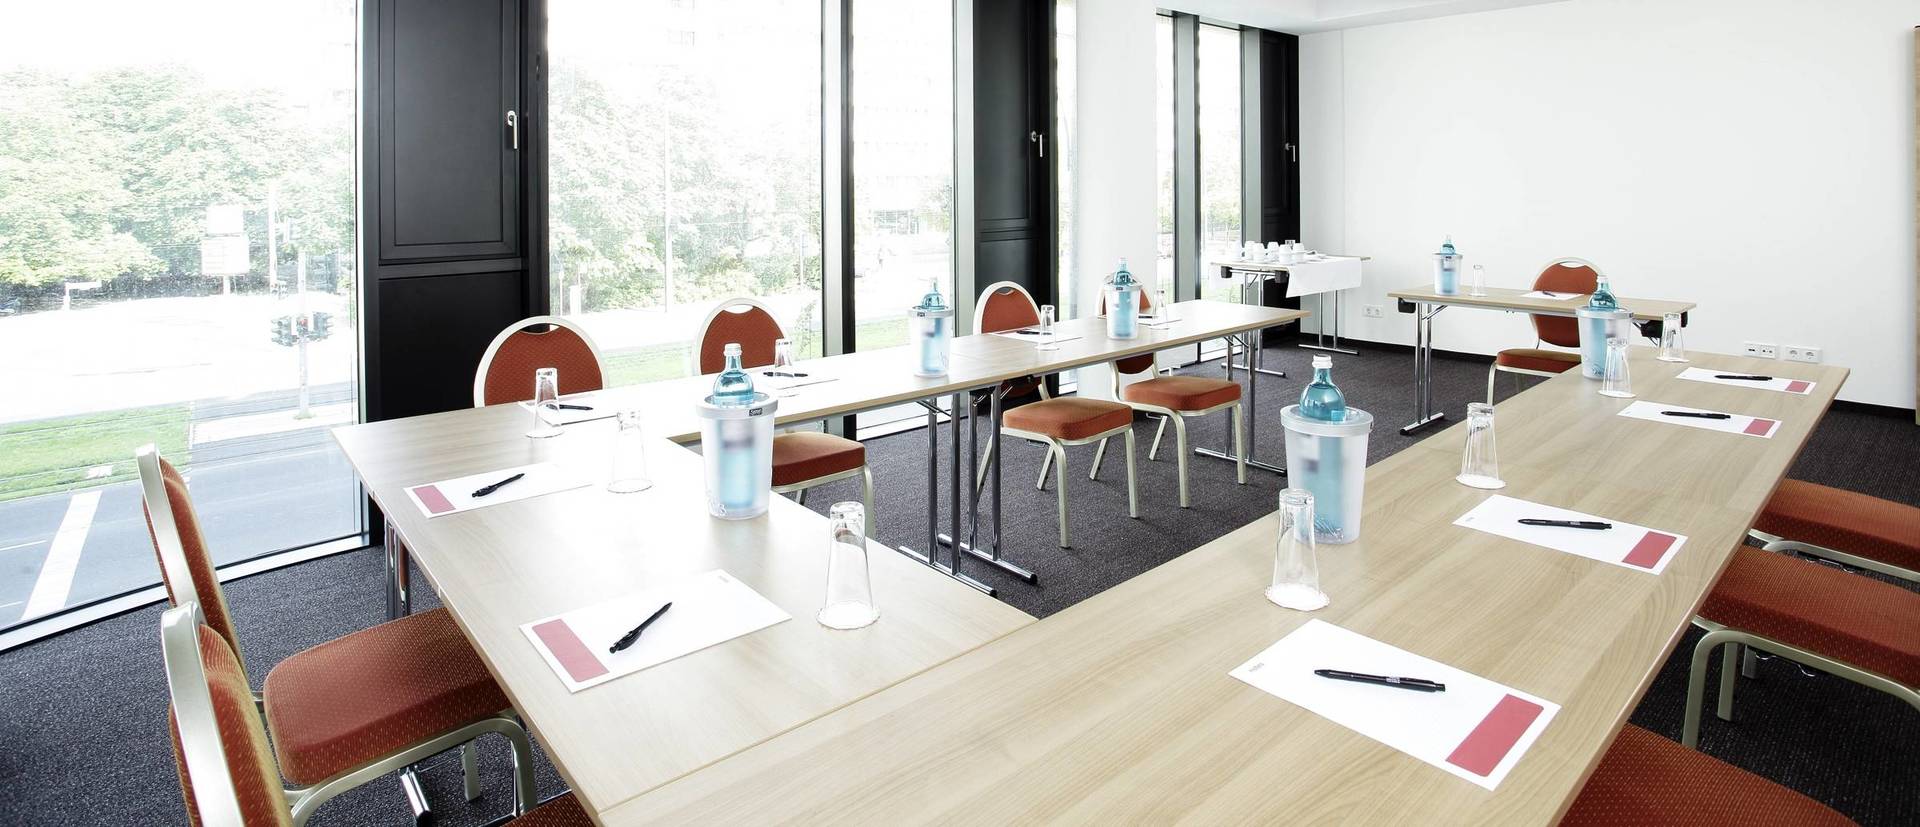 Meeting room at the H4 Hotel Berlin Alexanderplatz - Official website